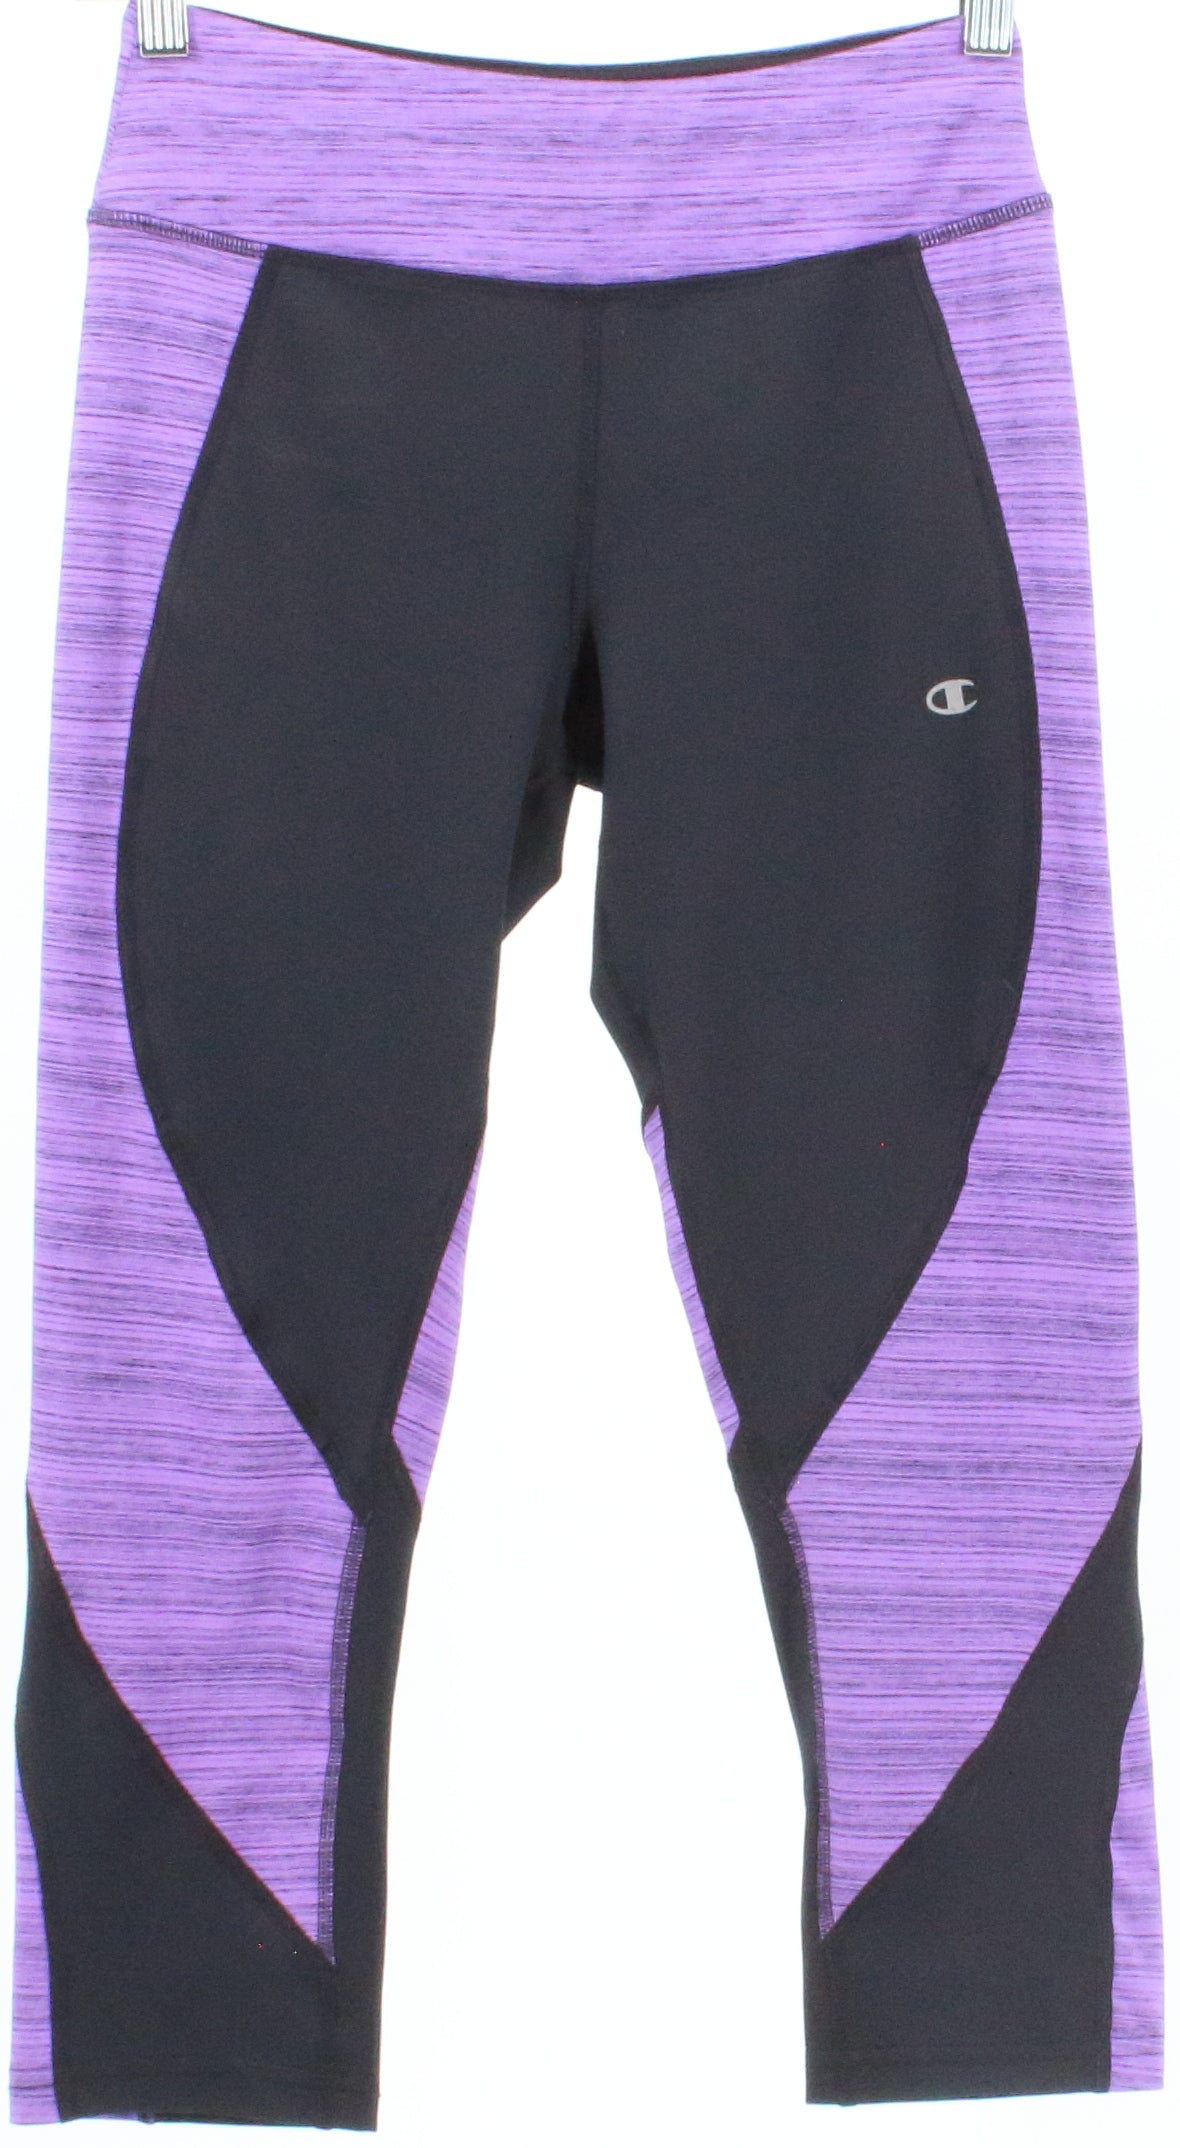 Champion Black and Purple Active Legging Pants